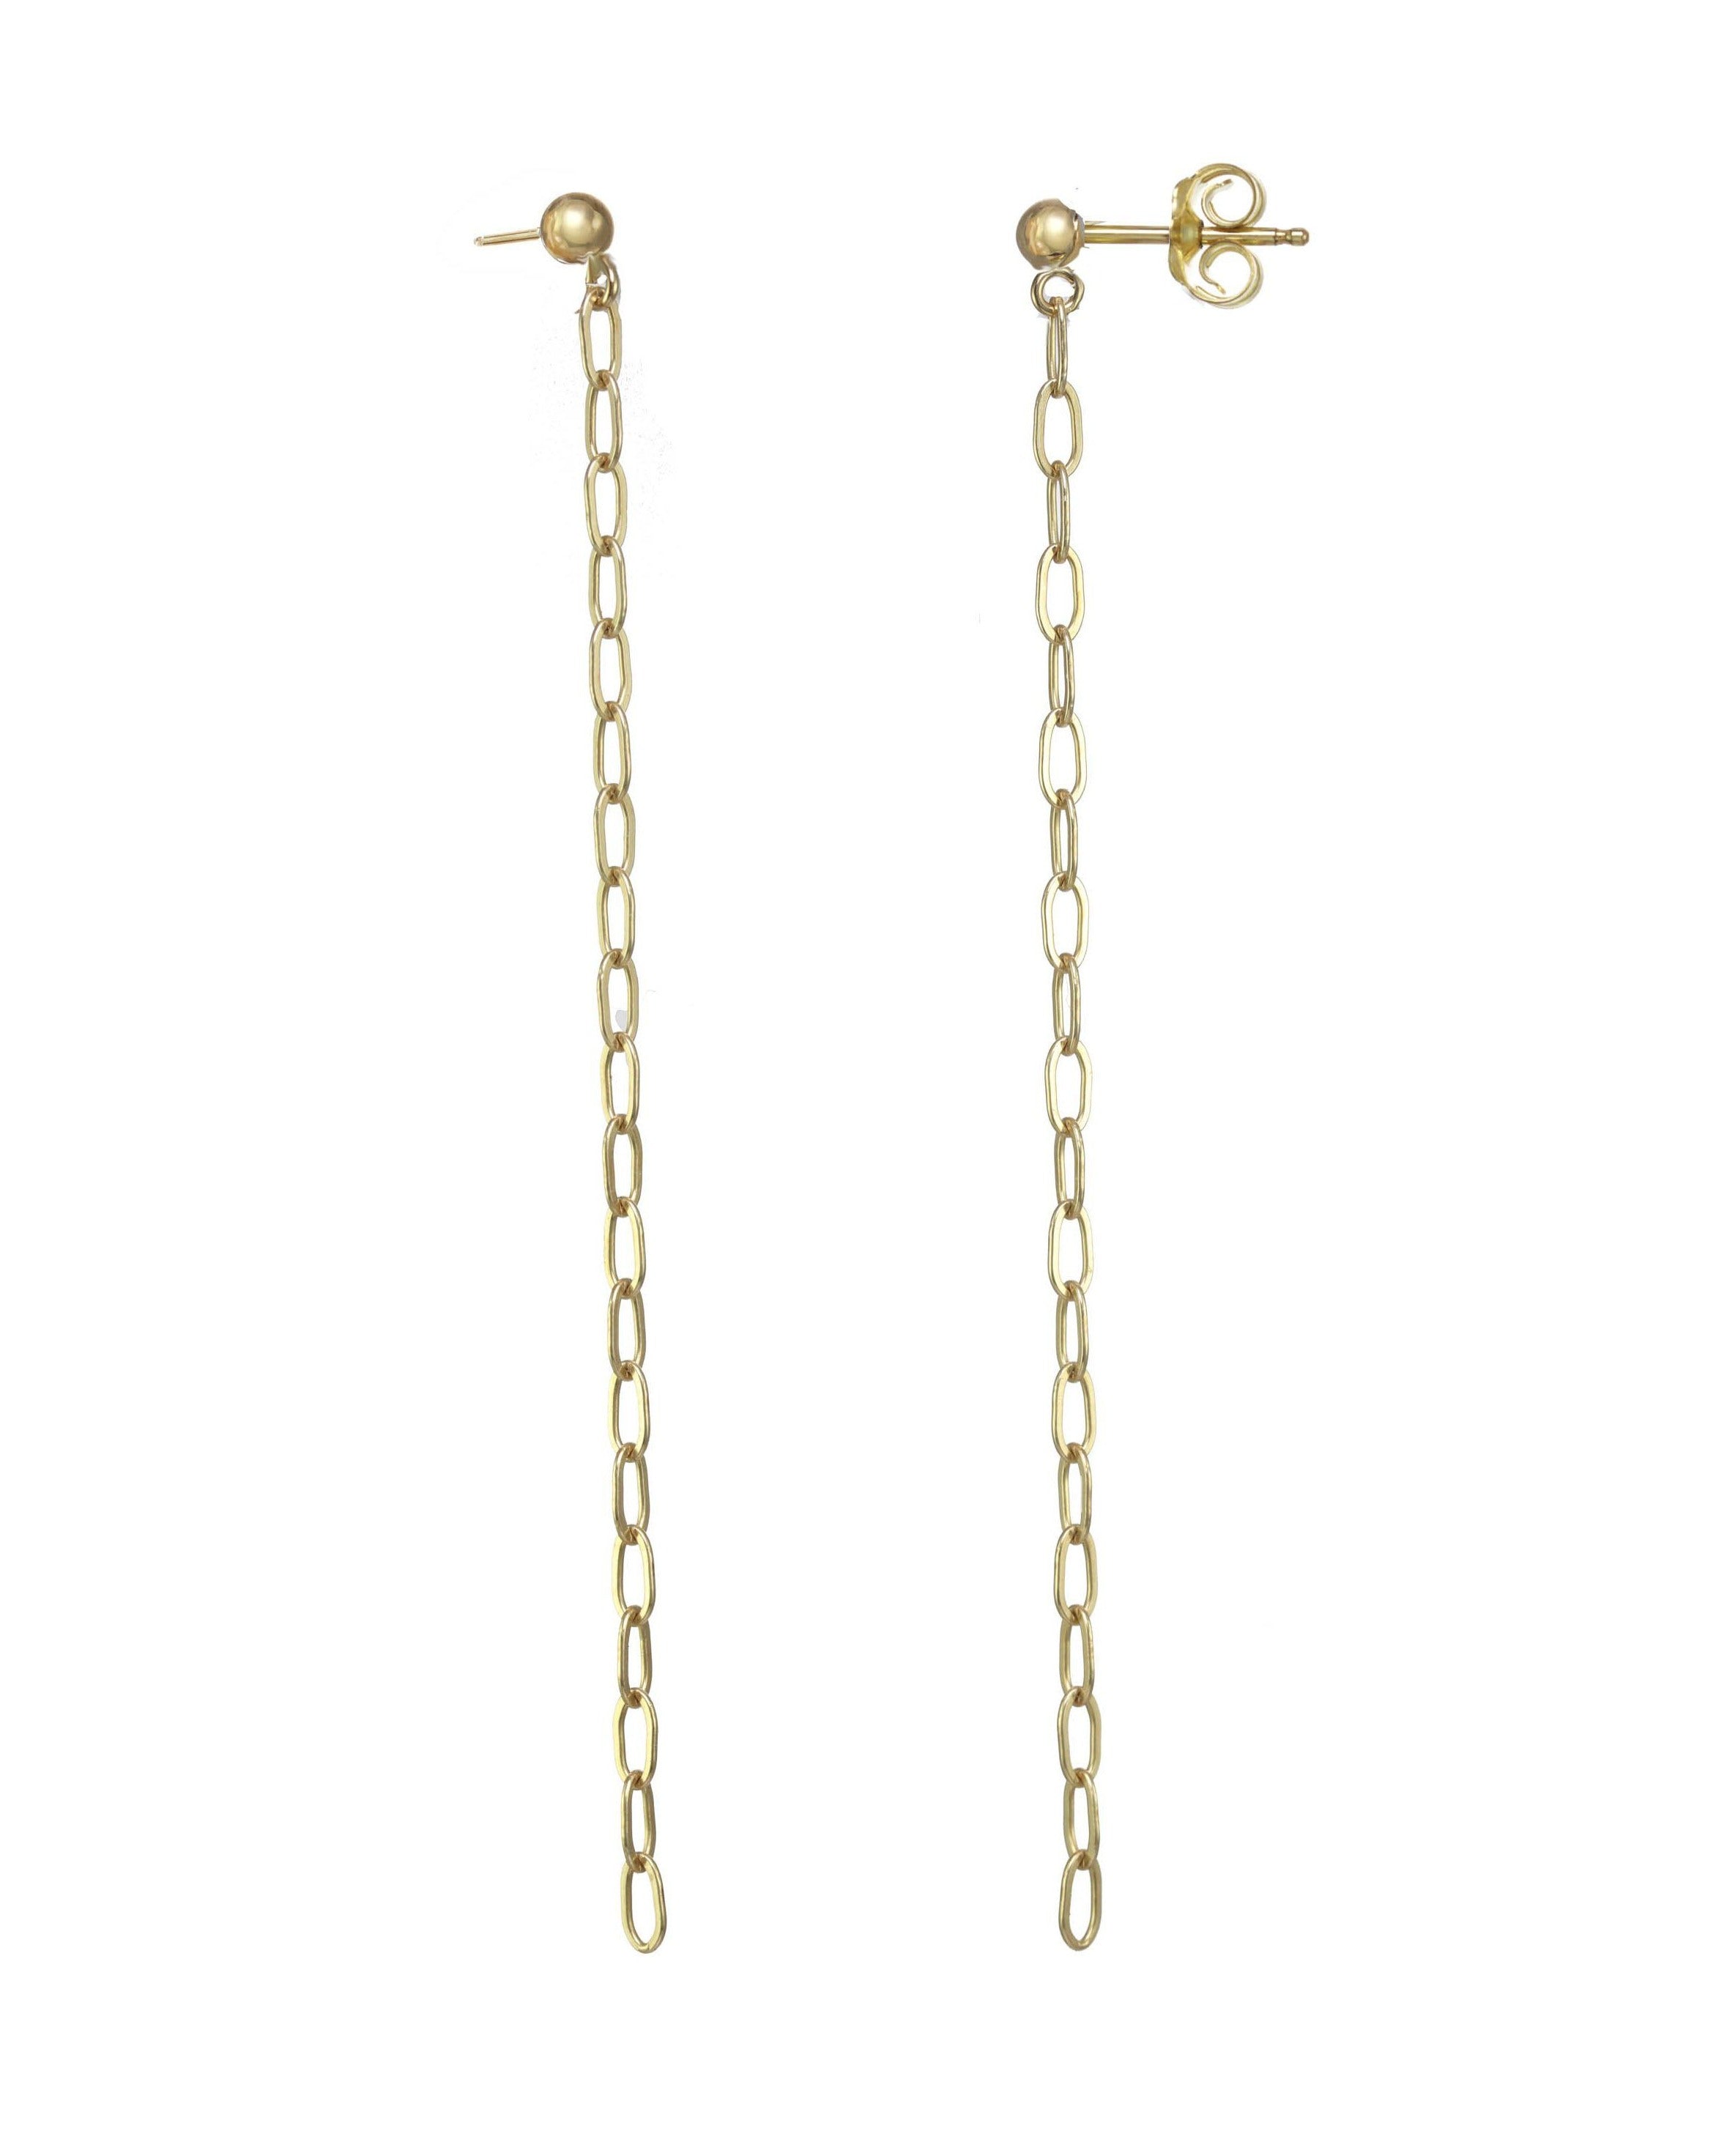 Alicia Chain Earrings by KOZAKH. Chain style drop earrings in 14K Gold Filled. Earring drop is 1.5 inches.